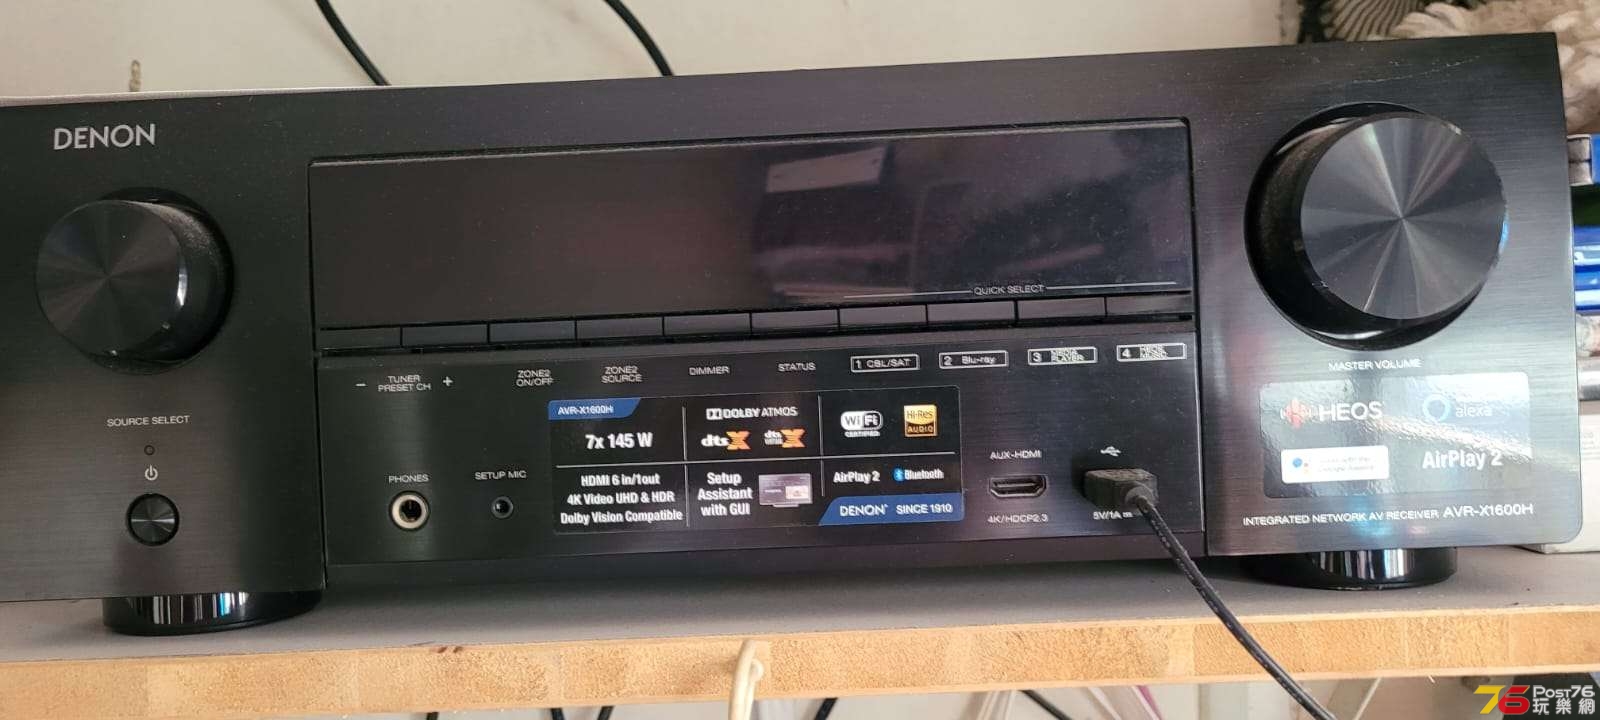 Sold Denon AVR-x1600H Polk Audio - 二手買賣- Post76.hk - Powered